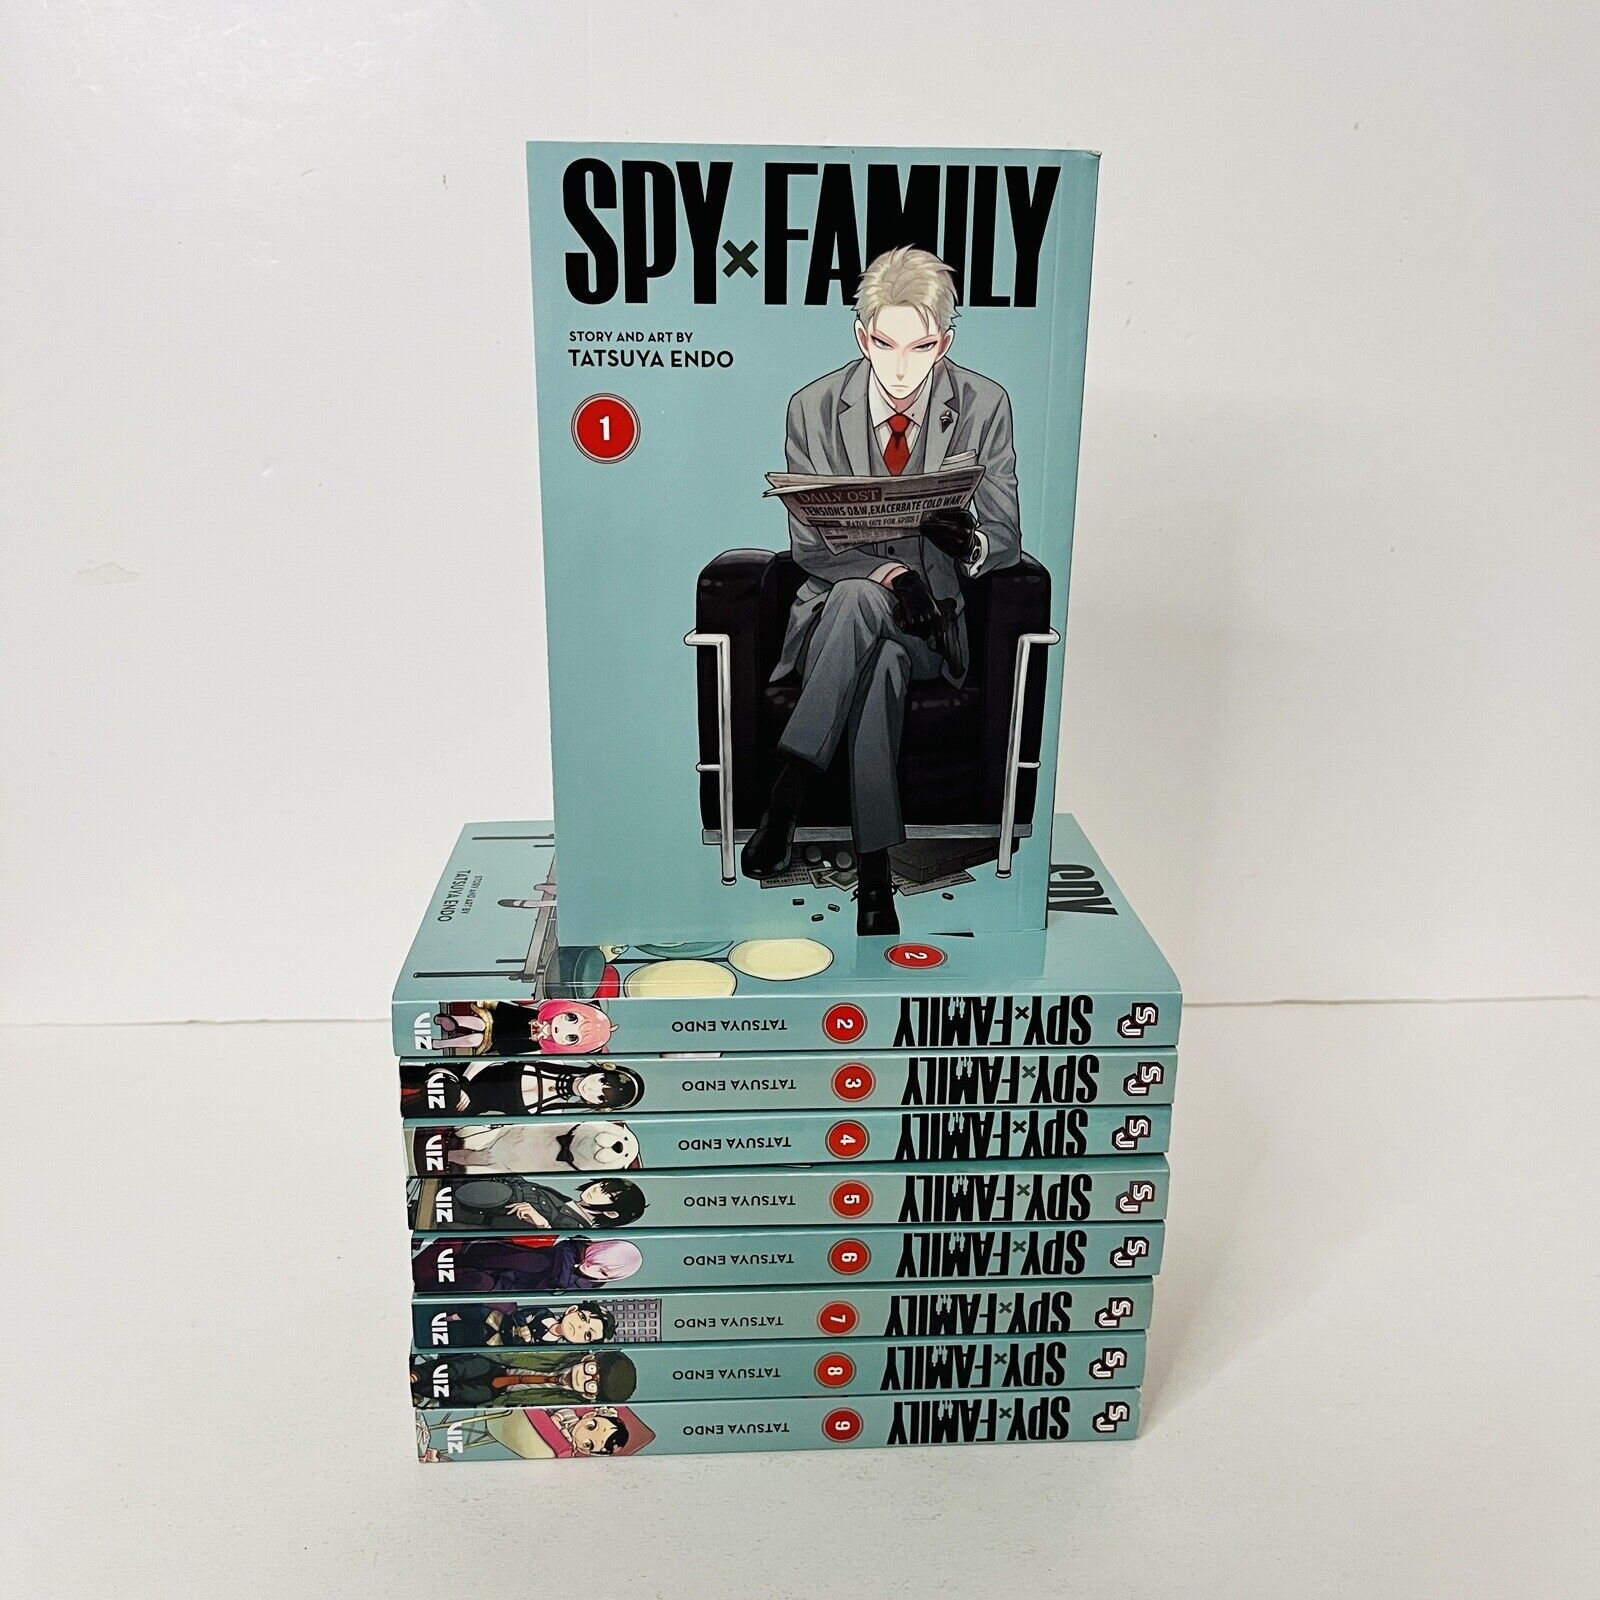 Spy x Family Vol 1-9 English Manga Lot By Tatsuya Endo Comics Humor YA Action VG